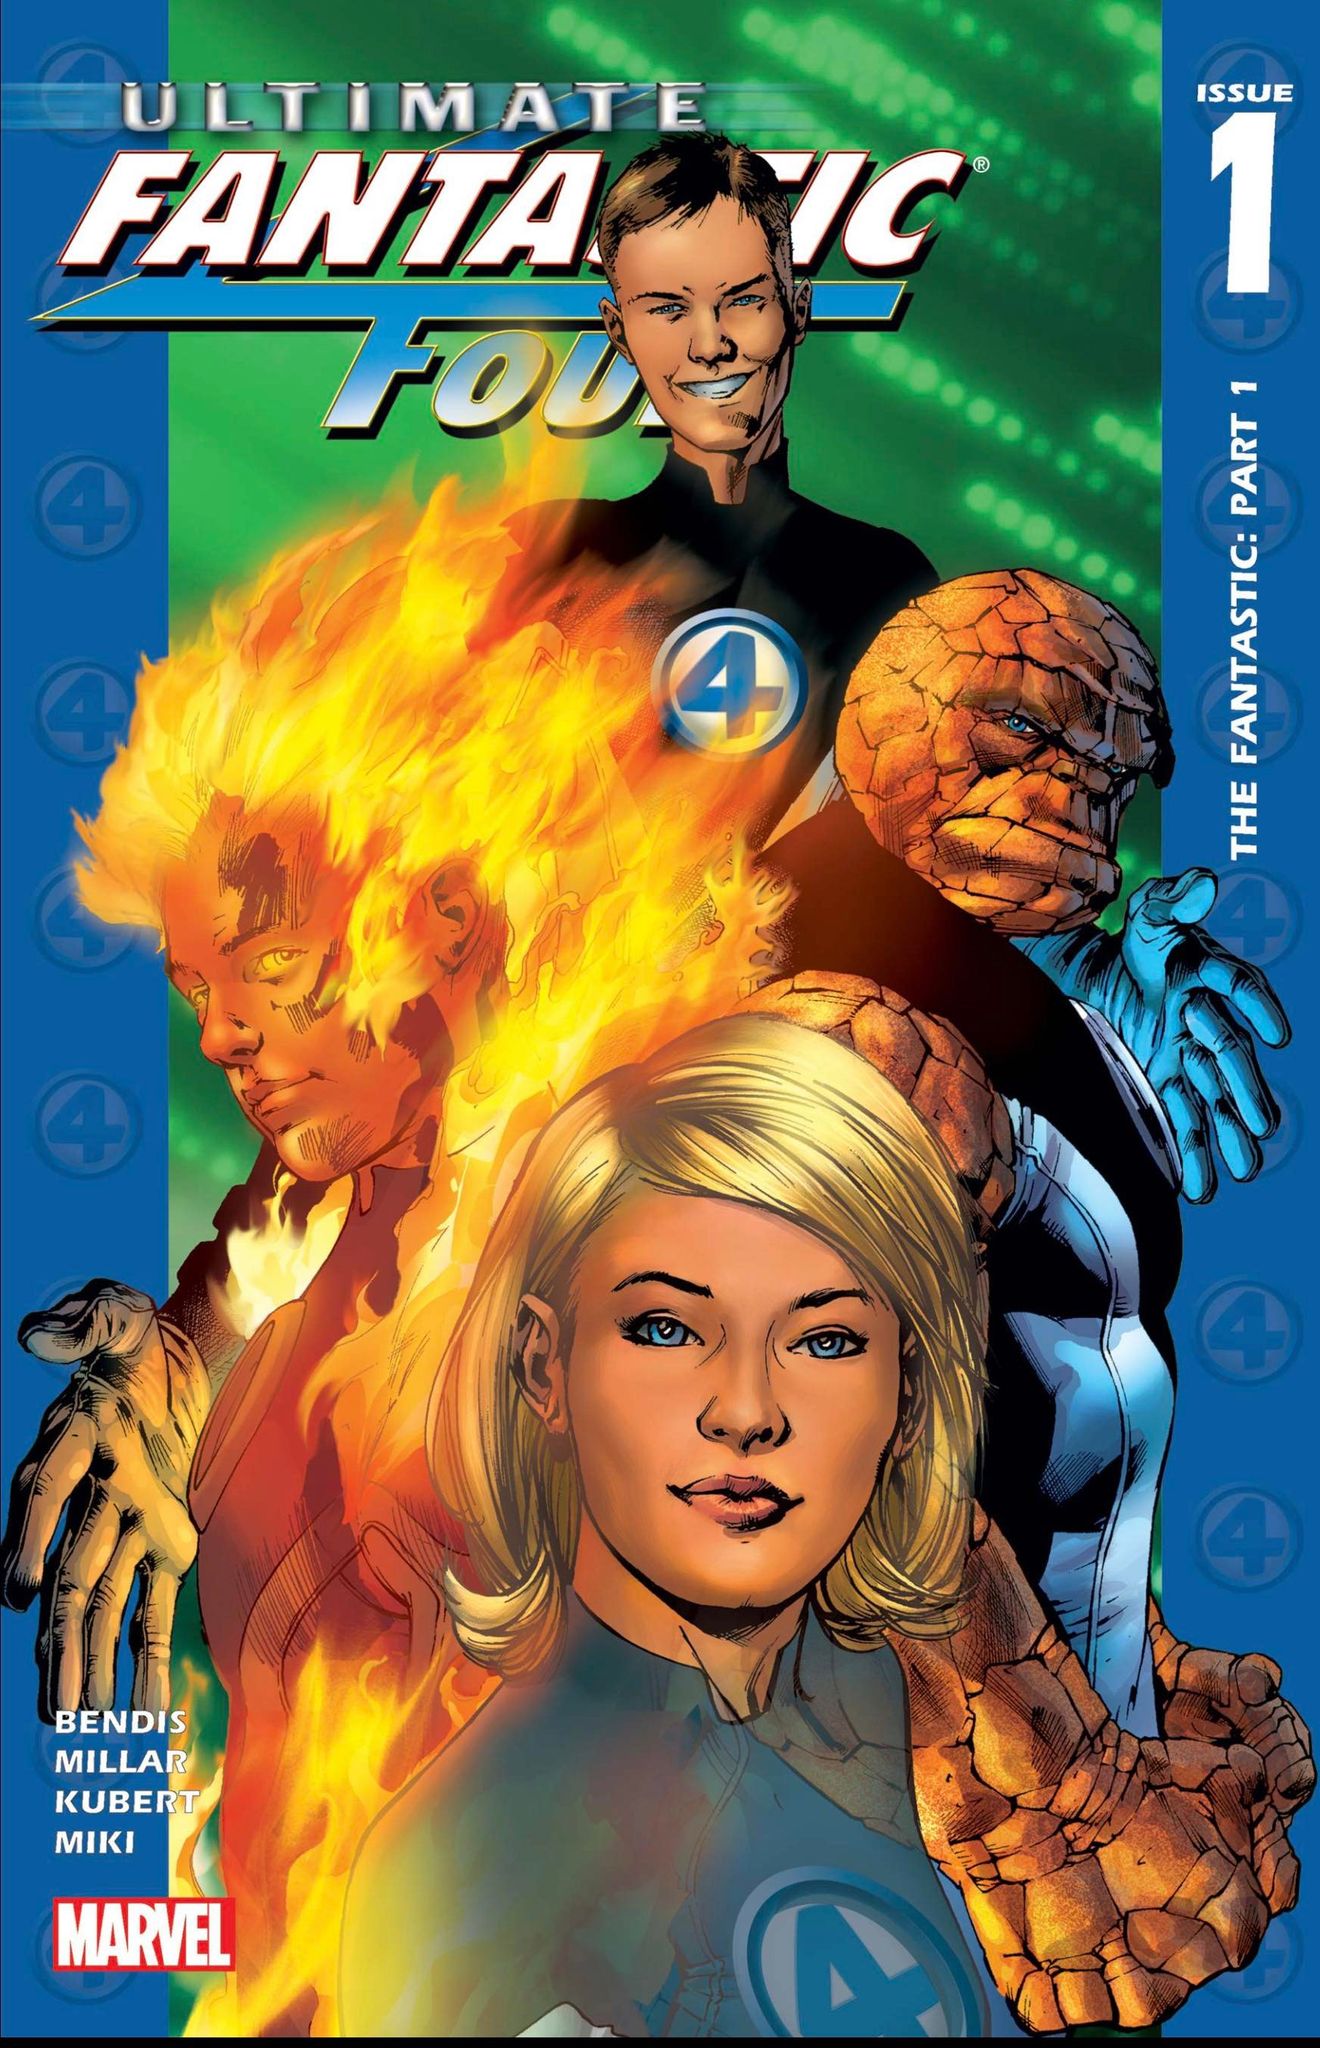 Ultimate Fantastic Four #1 cover